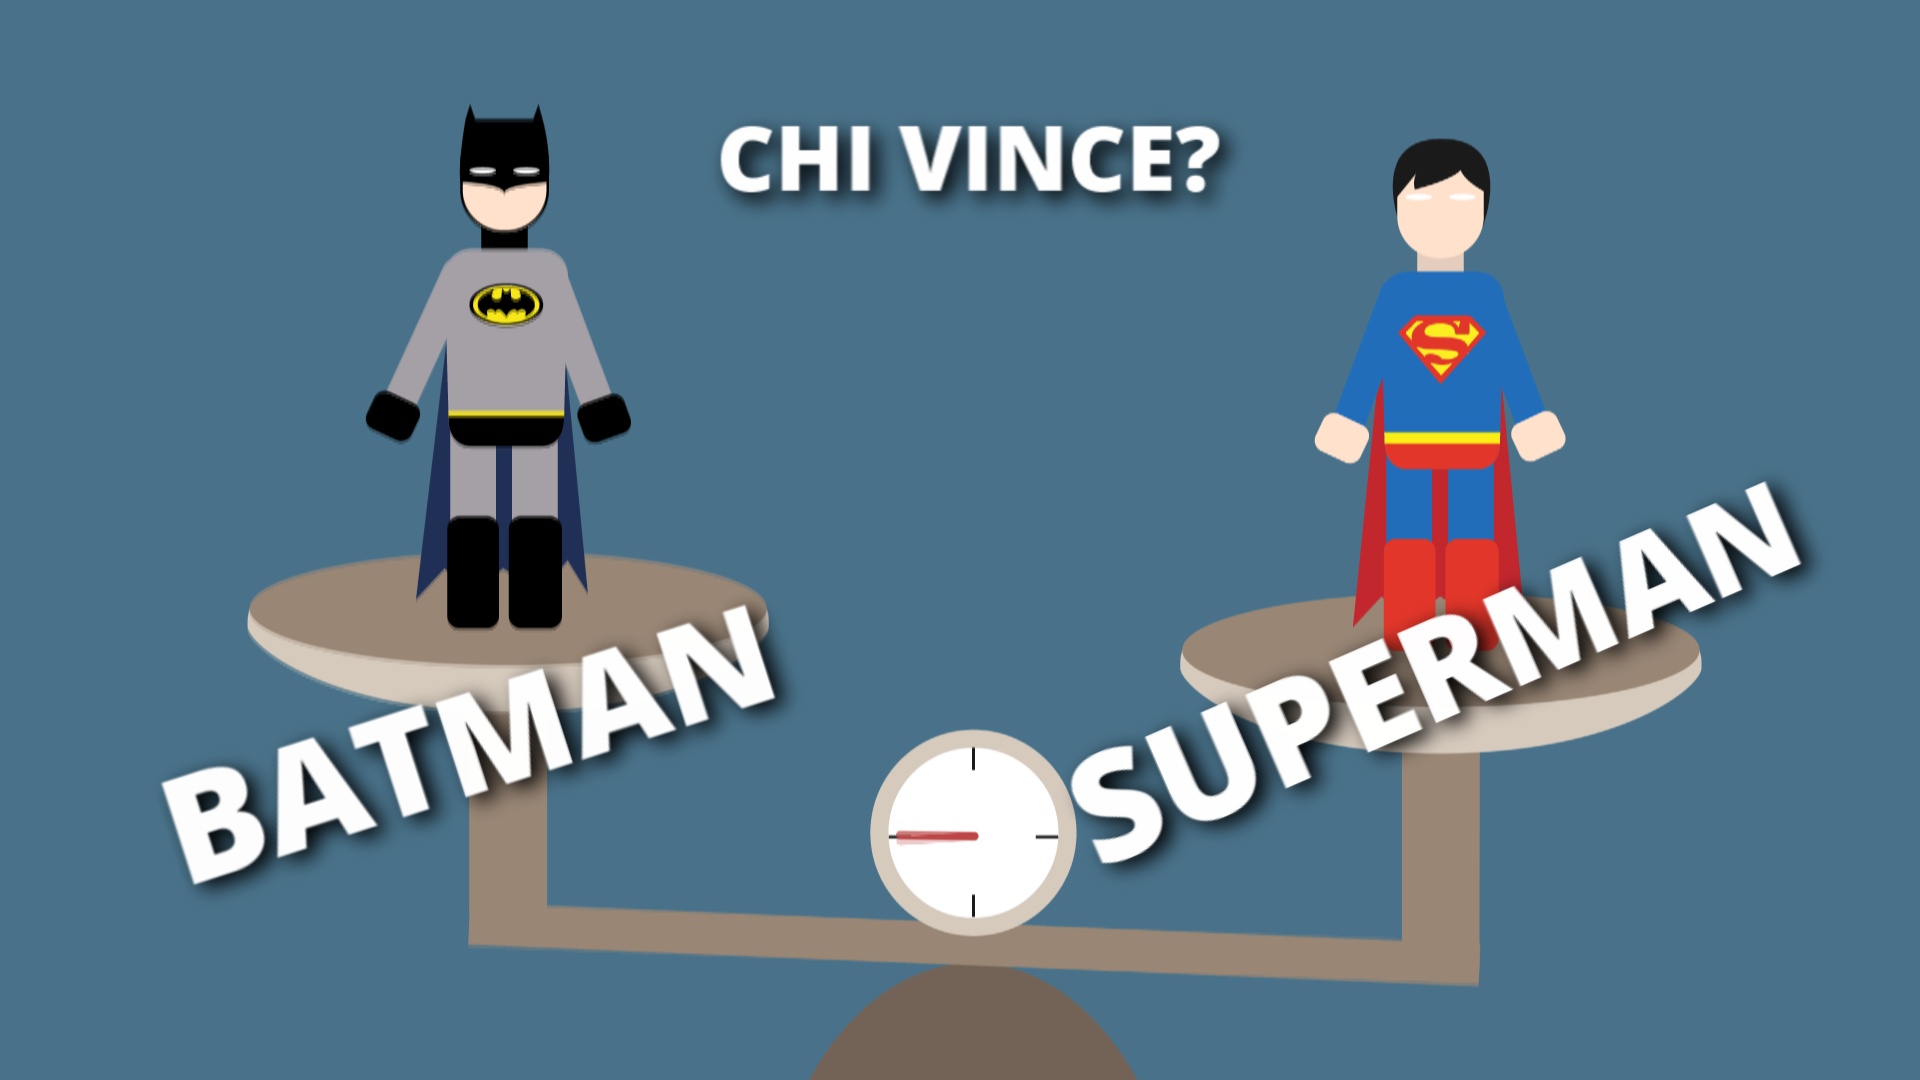 Chi vince davvero: Batman o Superman?